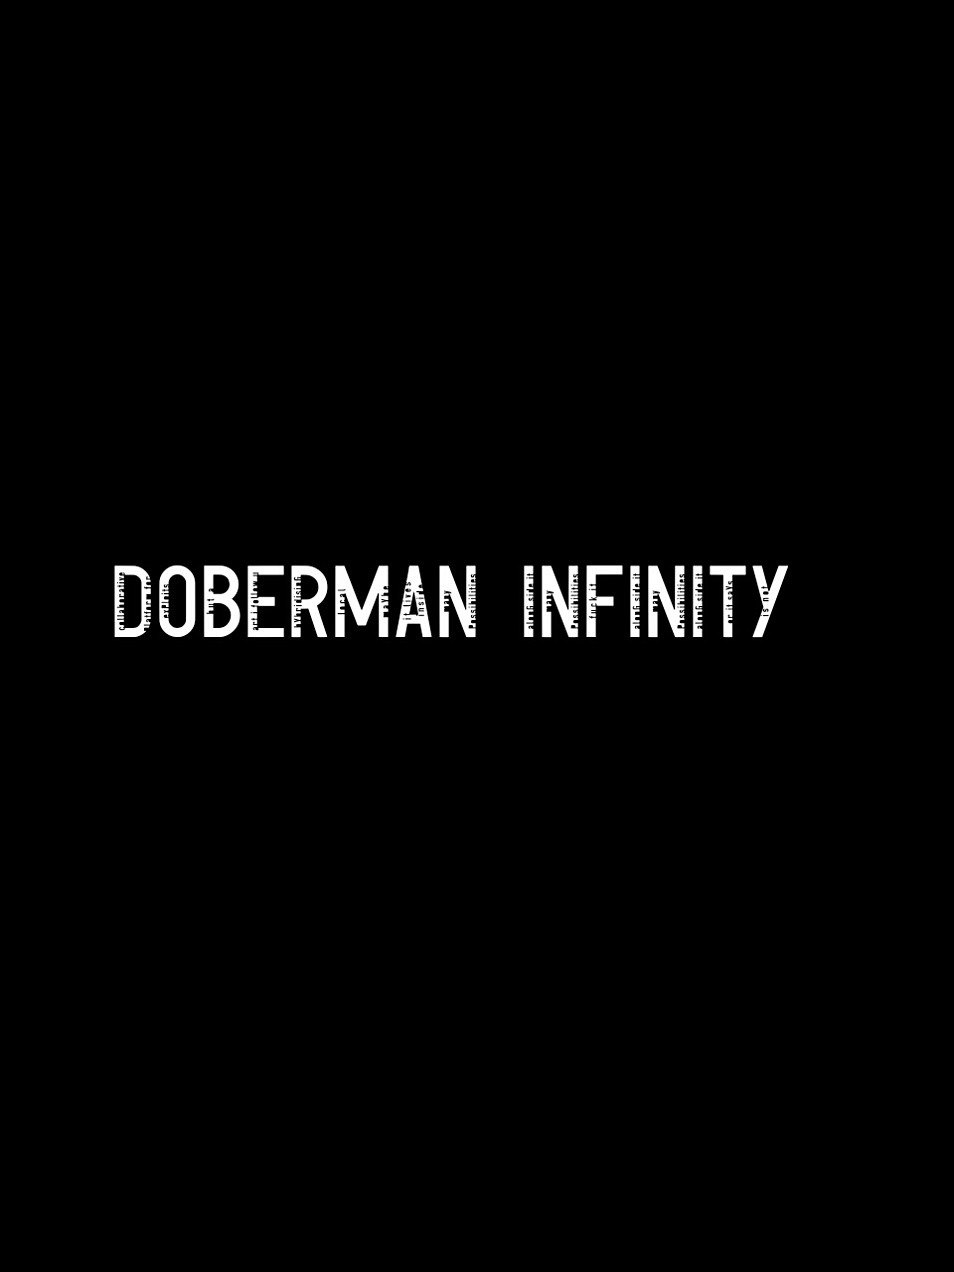 Doberman Infinity 壁紙 完全無料画像検索のプリ画像 Bygmo